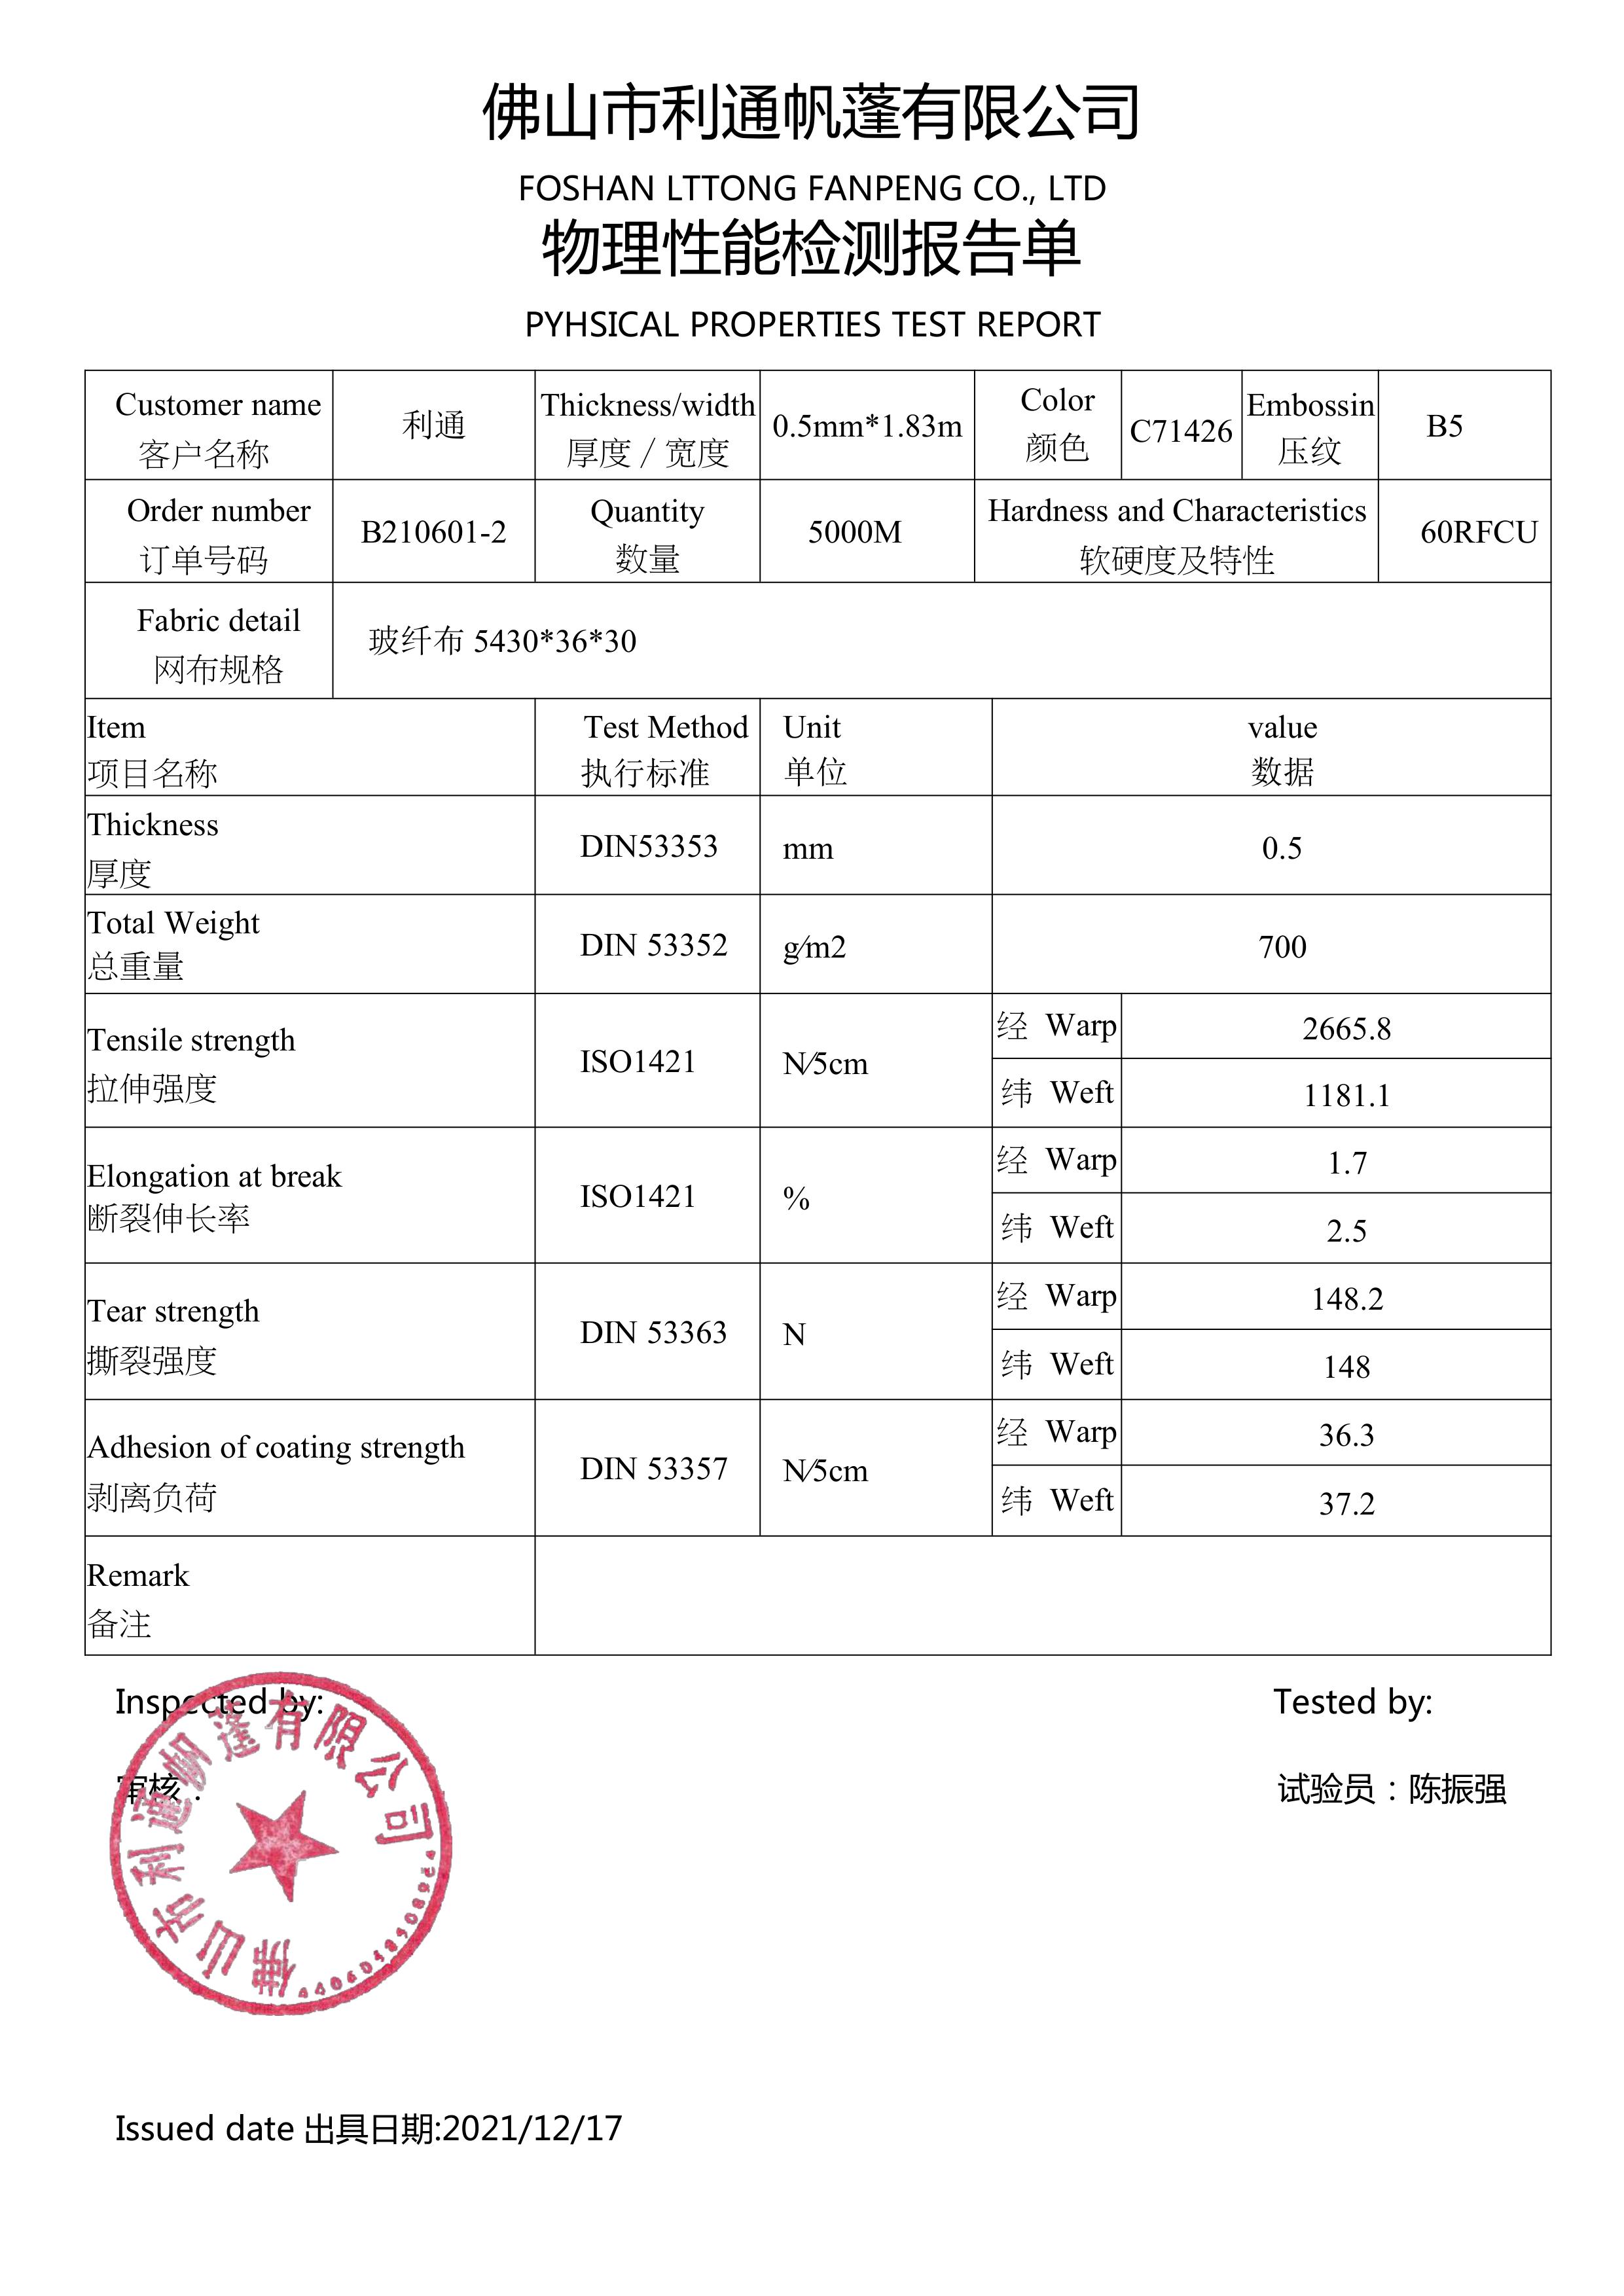 Data sheet for 0.5mm flame retardant PVC coated tarpaulin